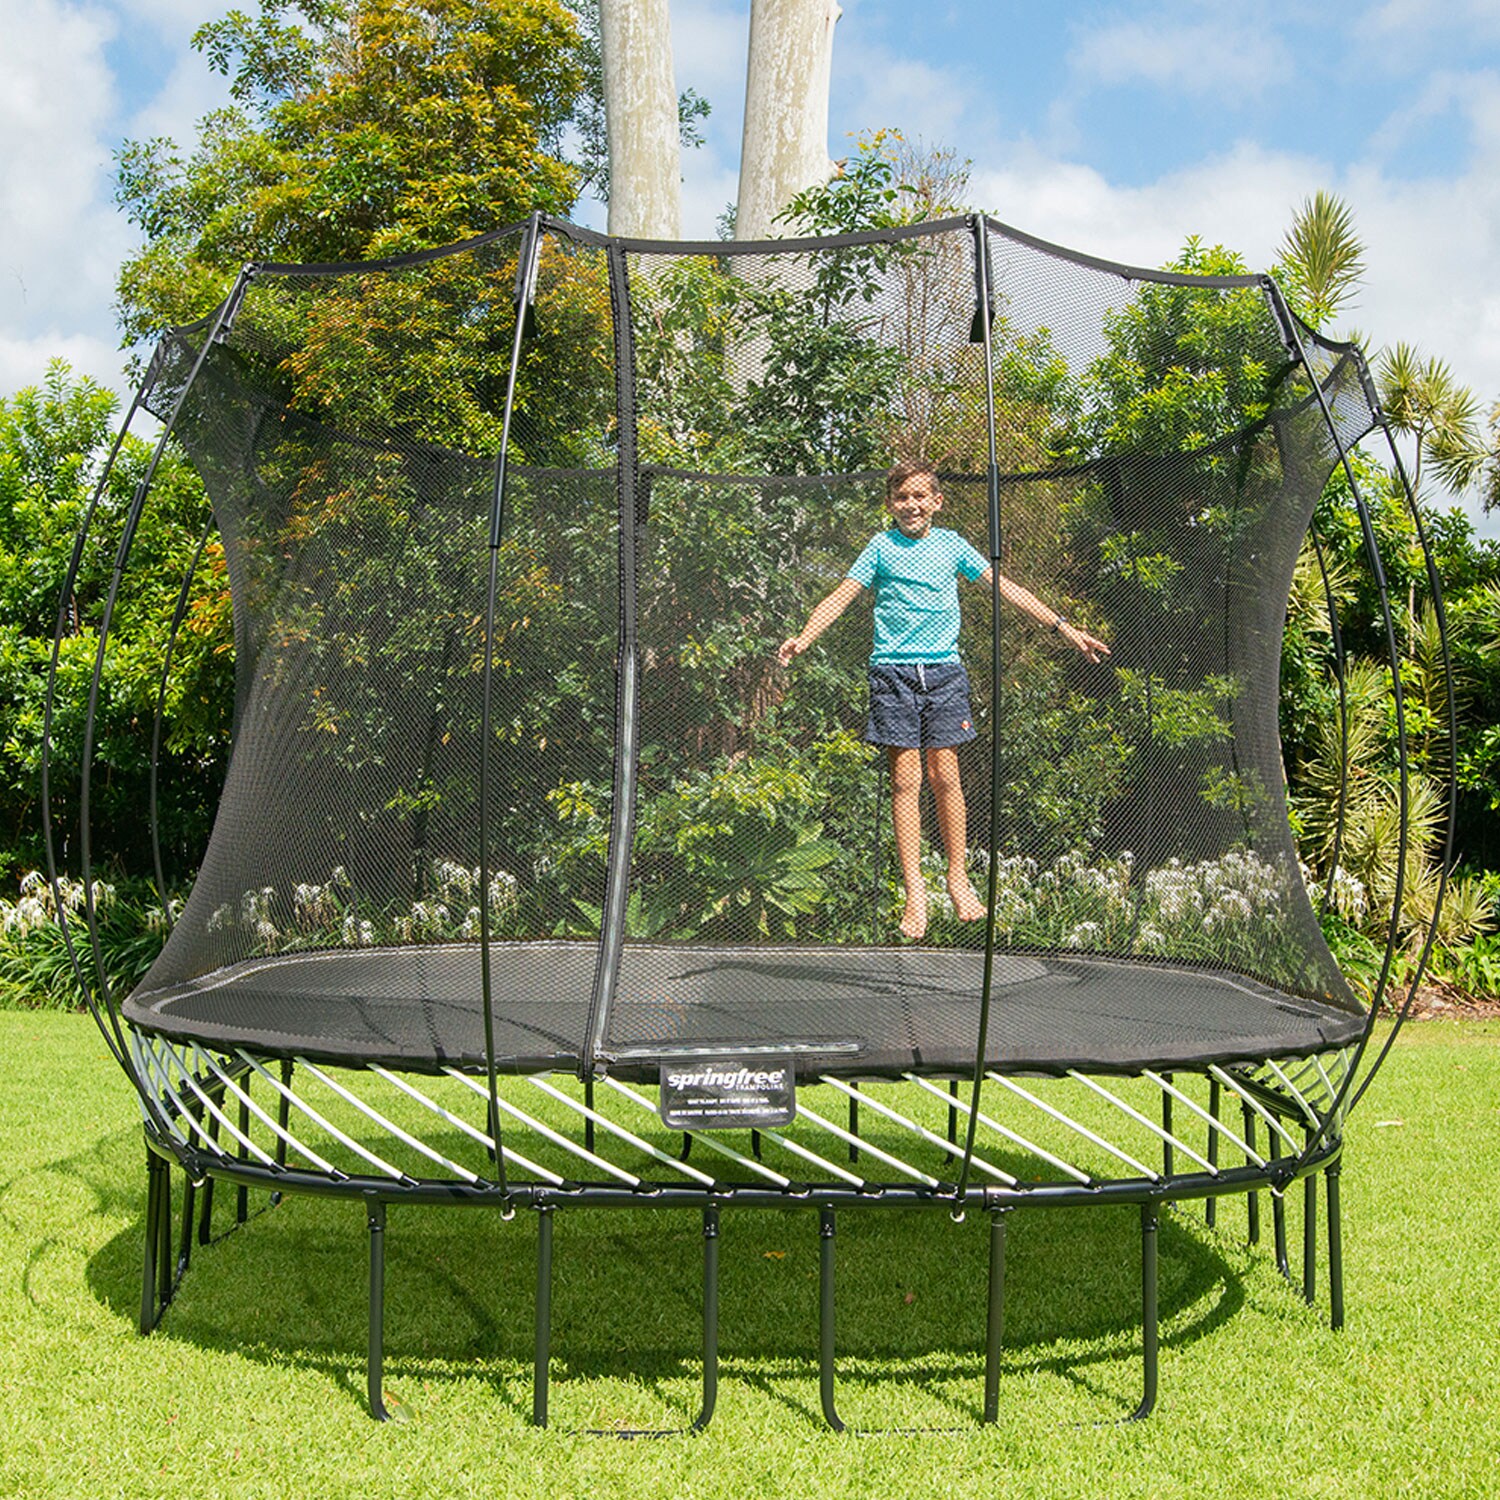 Accessories fun Springfree trampoline Ground Anchor outdoor kids,fun cheap 